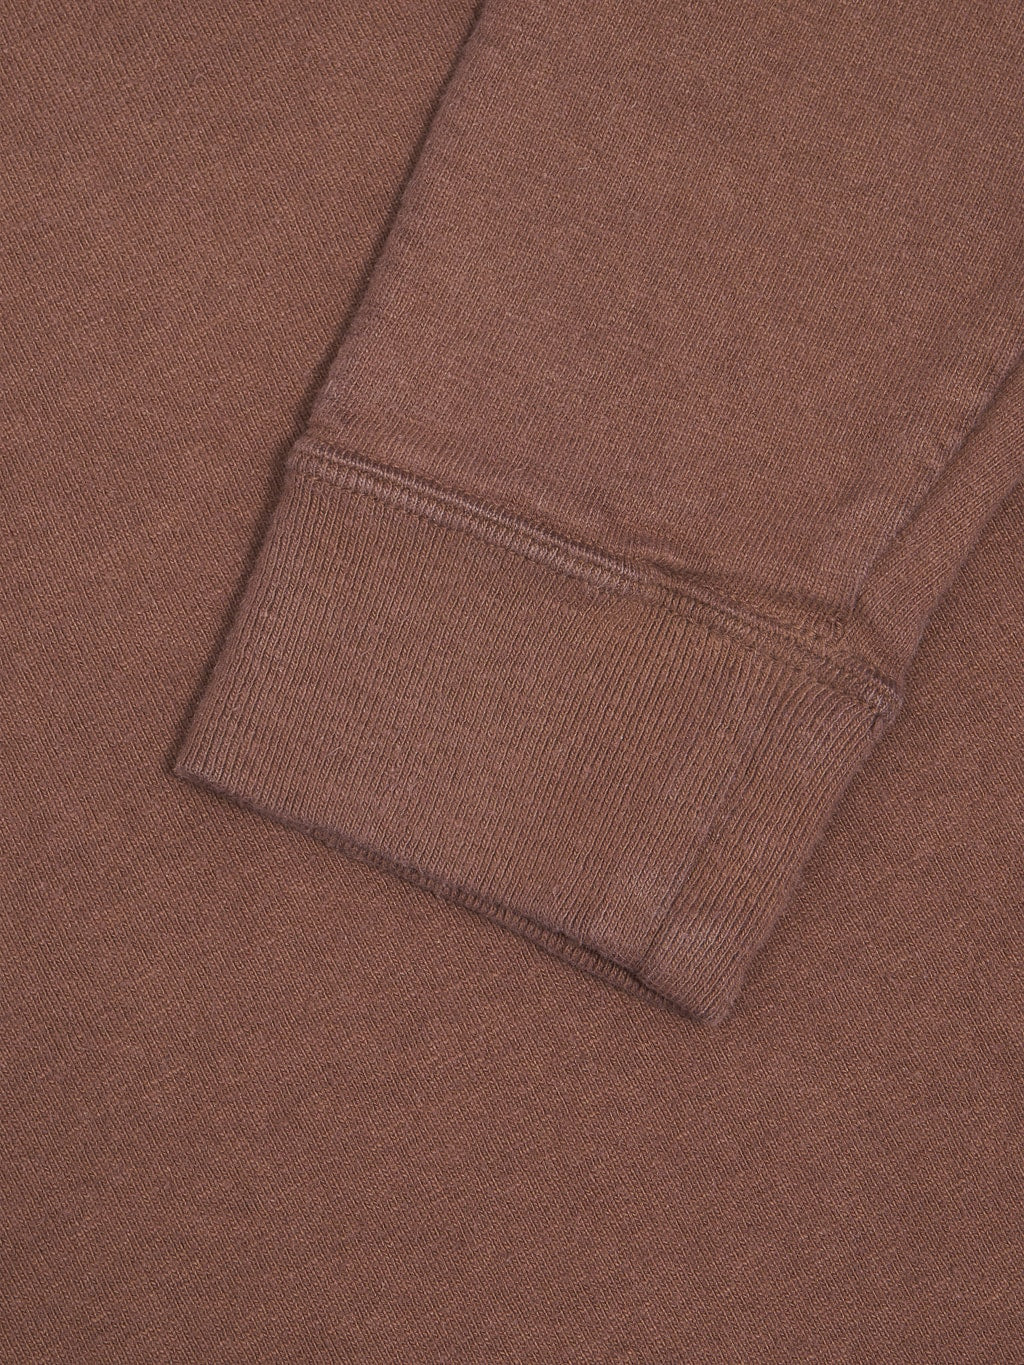 Samurai Jeans Japanese long sleeve tshirt dark cuff stitching